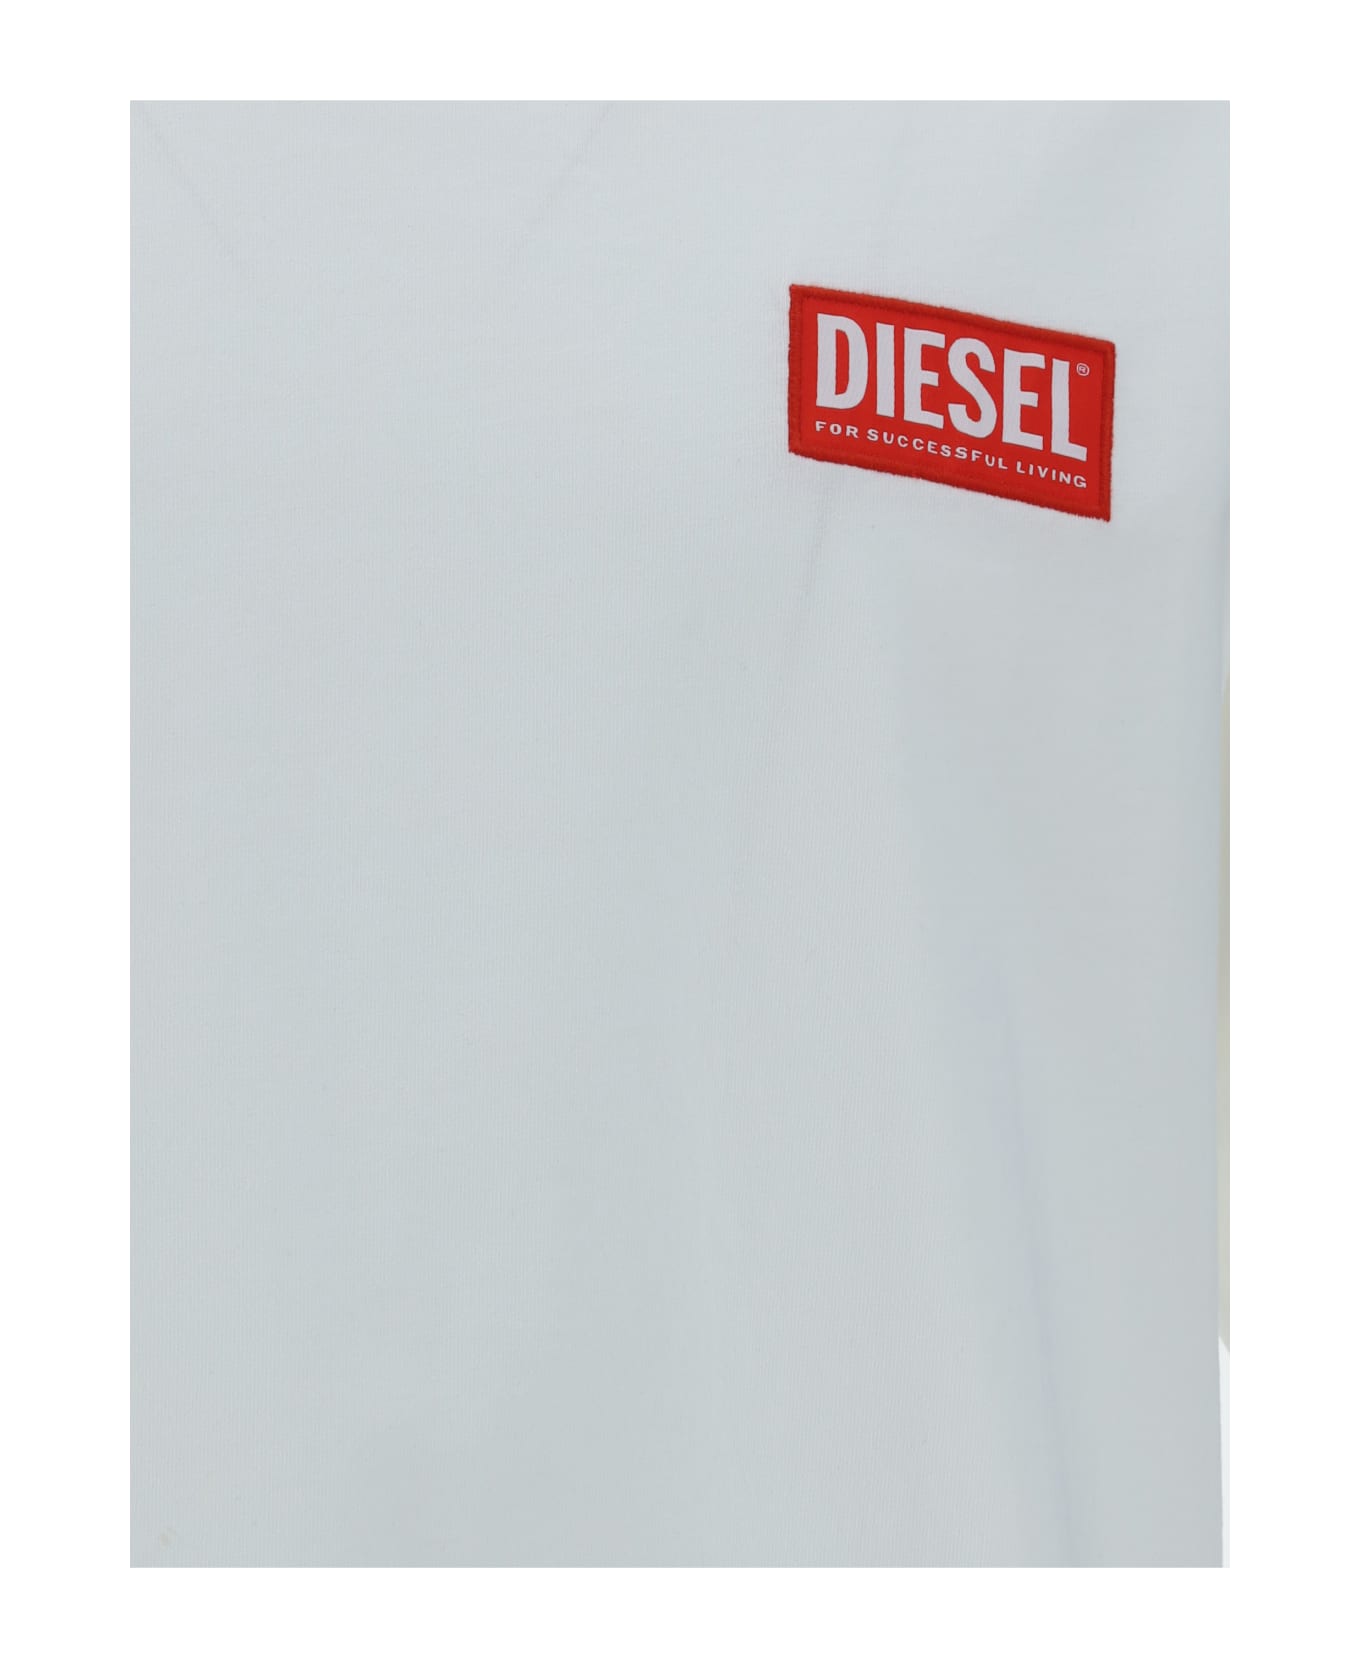 Diesel T-shirt - White シャツ